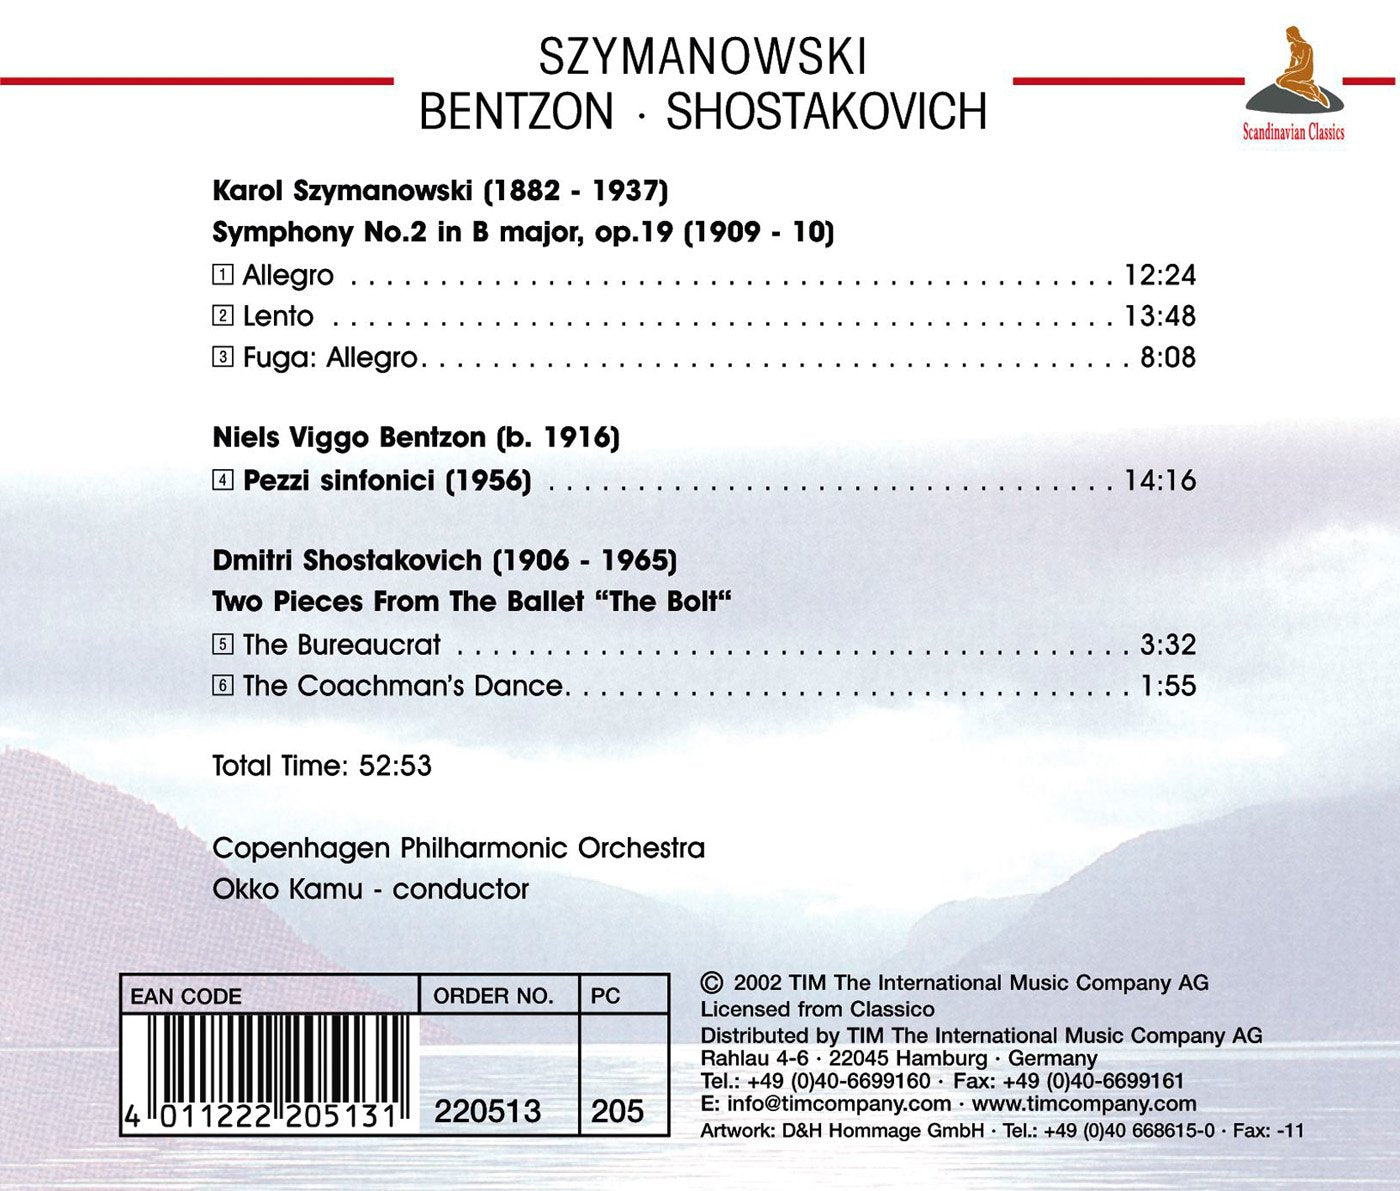 SZYMANOWSKI: Symphony No. 2; BENTZON: Pezzi Sinfonici;  SHOSTAKOVICH: Selections from "The Bolt" - Copenhagen Philharmonic